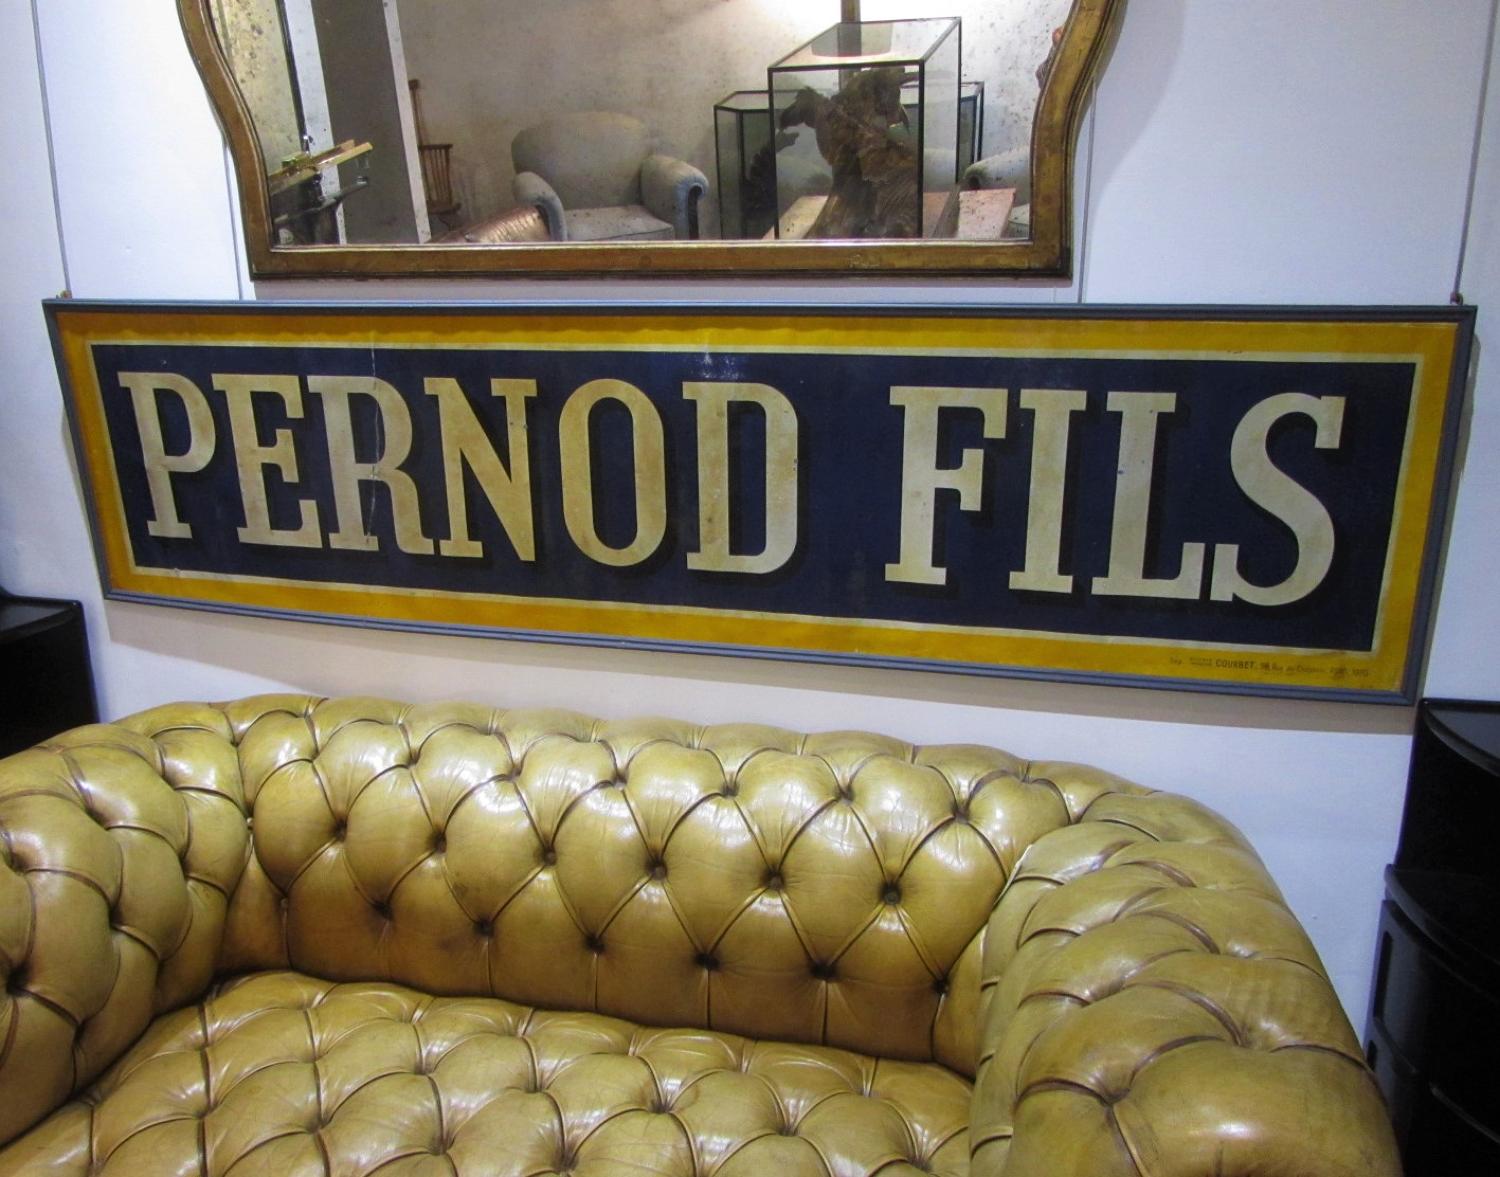 A large Pernod Fils advertisement